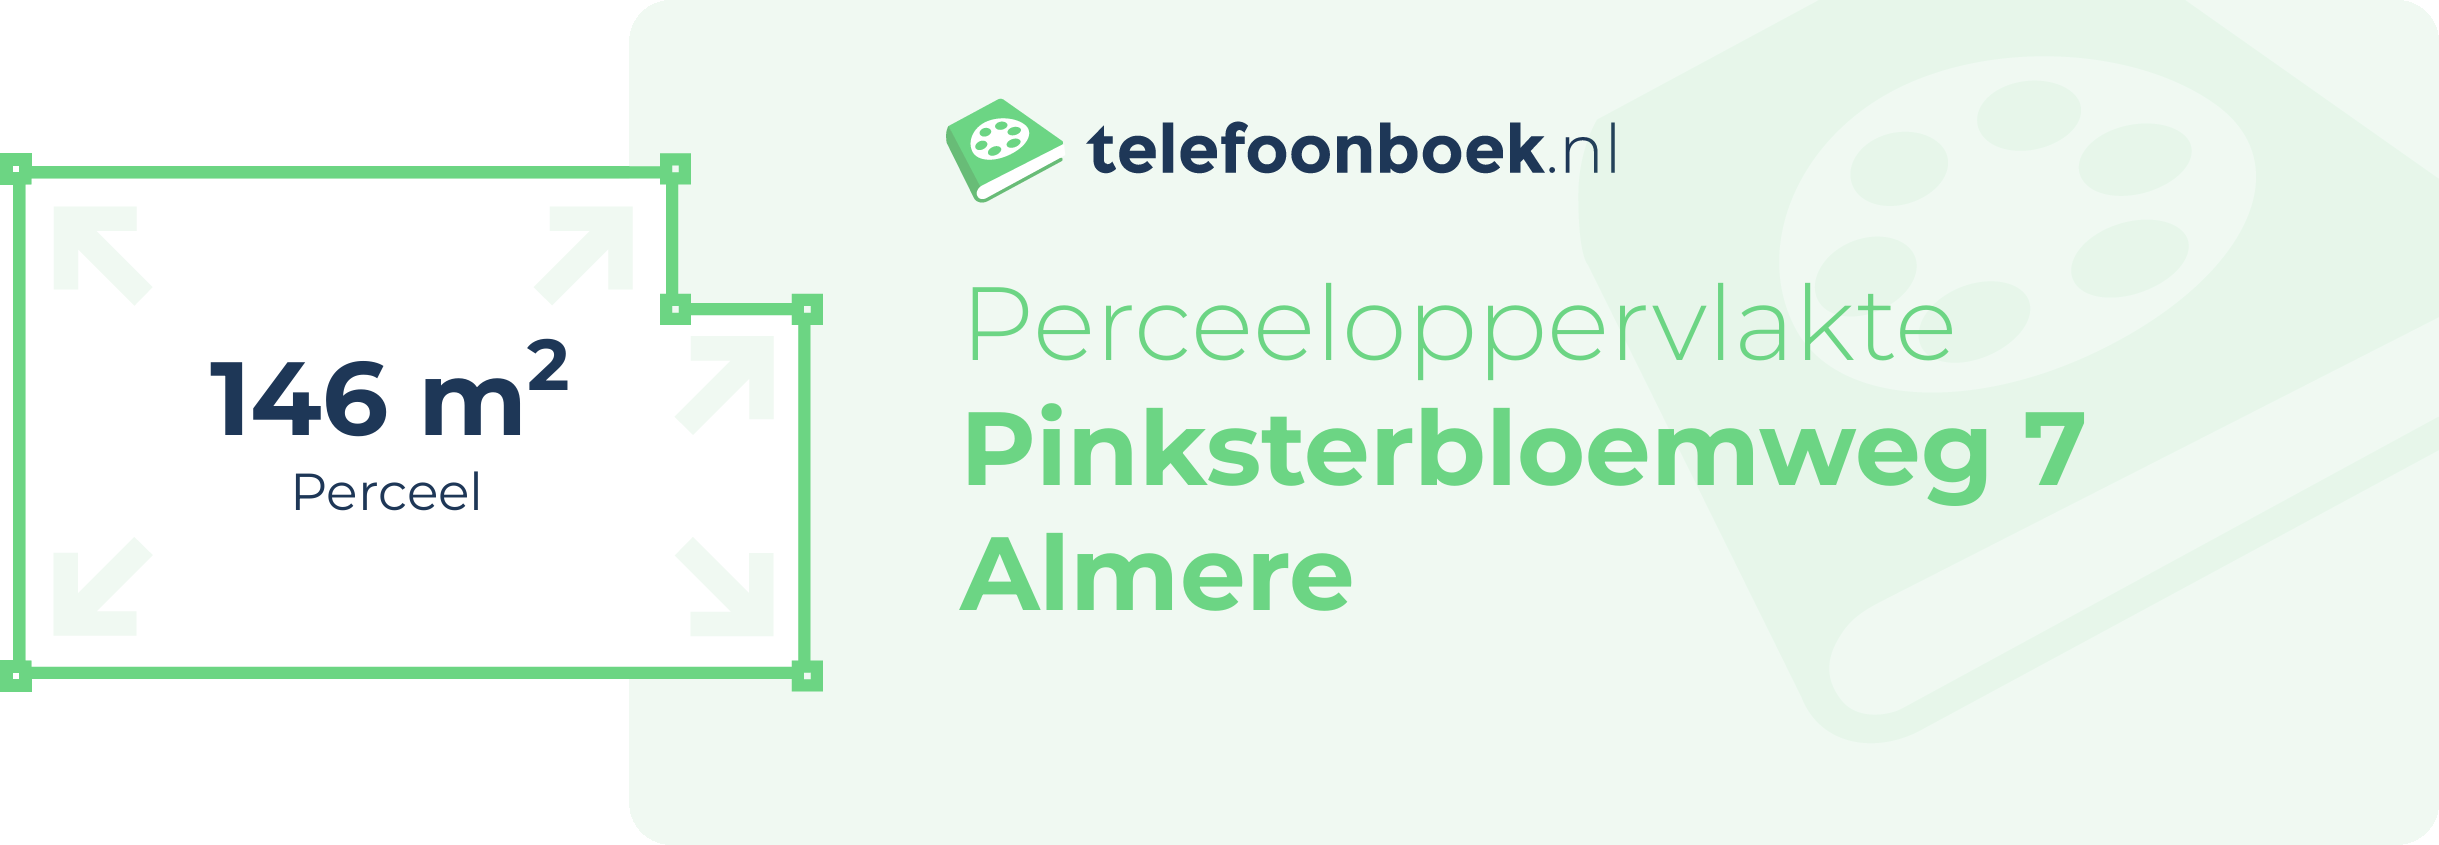 Perceeloppervlakte Pinksterbloemweg 7 Almere